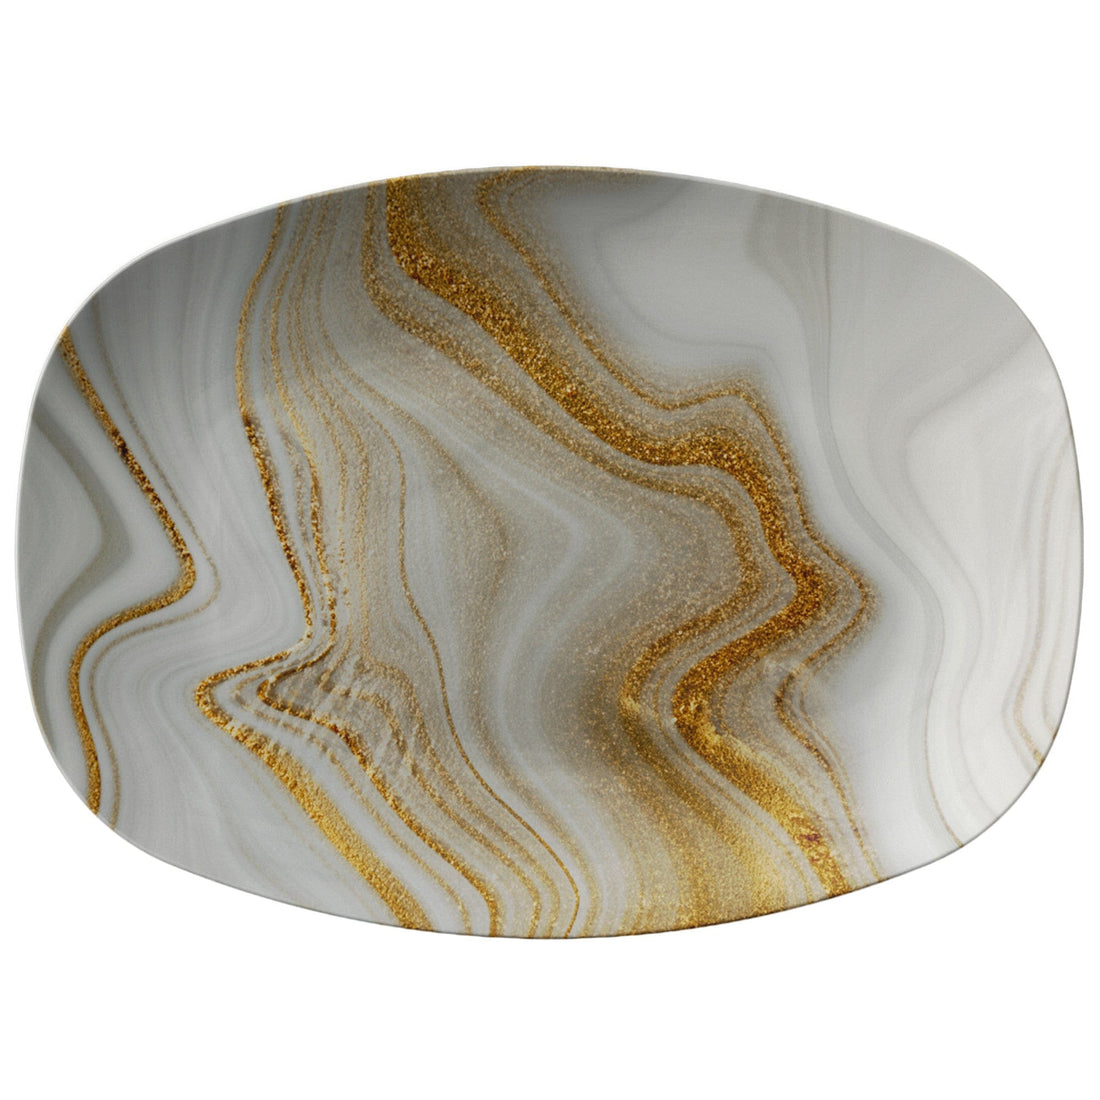 Kate McEnroe New York Crean and Gold Swirl Marble Platter Serving Platters P21-CGO-MAR-S29